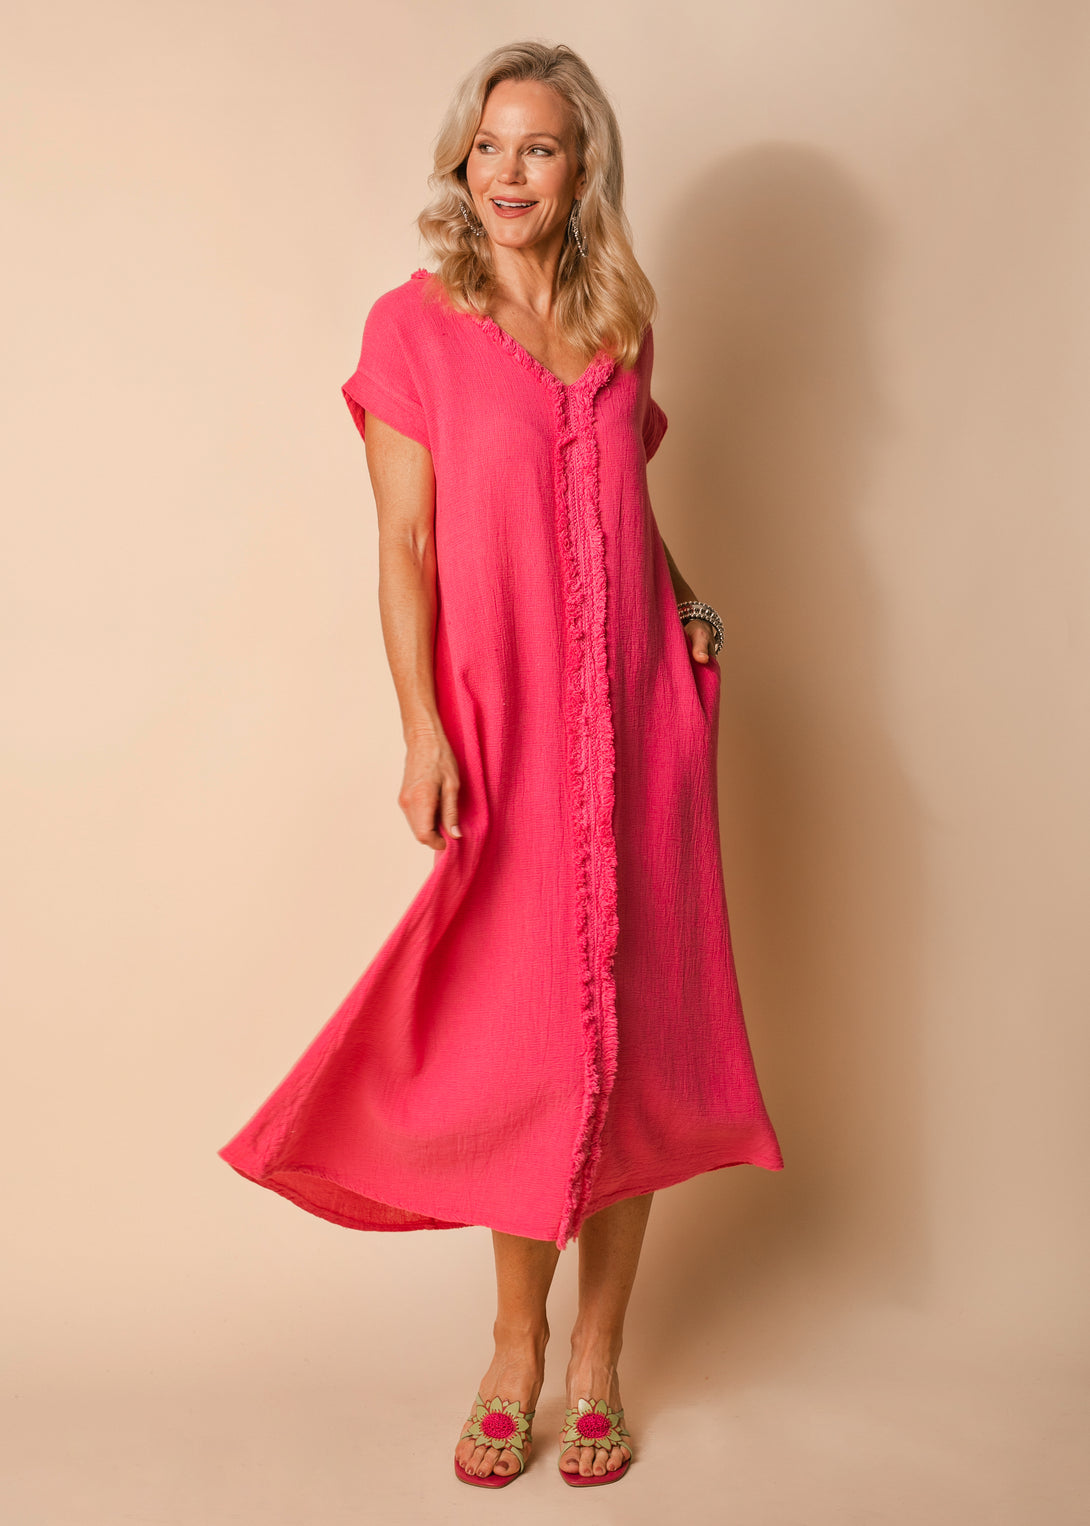 Kaidi Linen Dress in Raspberry Sorbet - Imagine Fashion